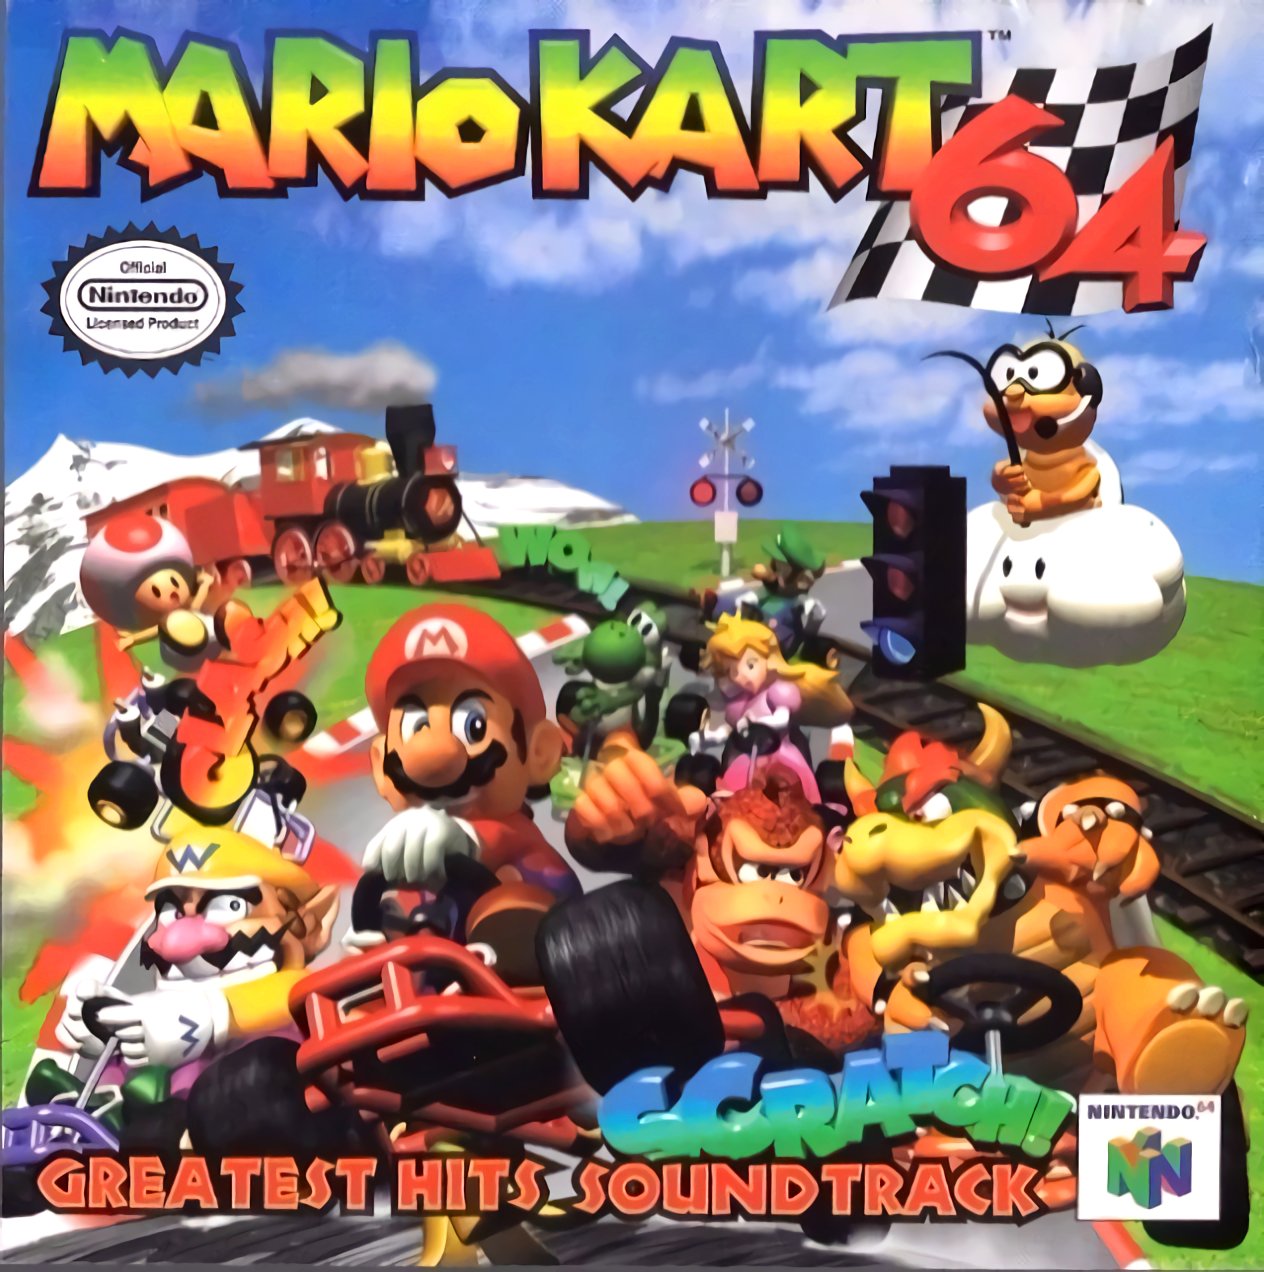 The album art for Mario Kart 64: Greatest Hits Soundtrack